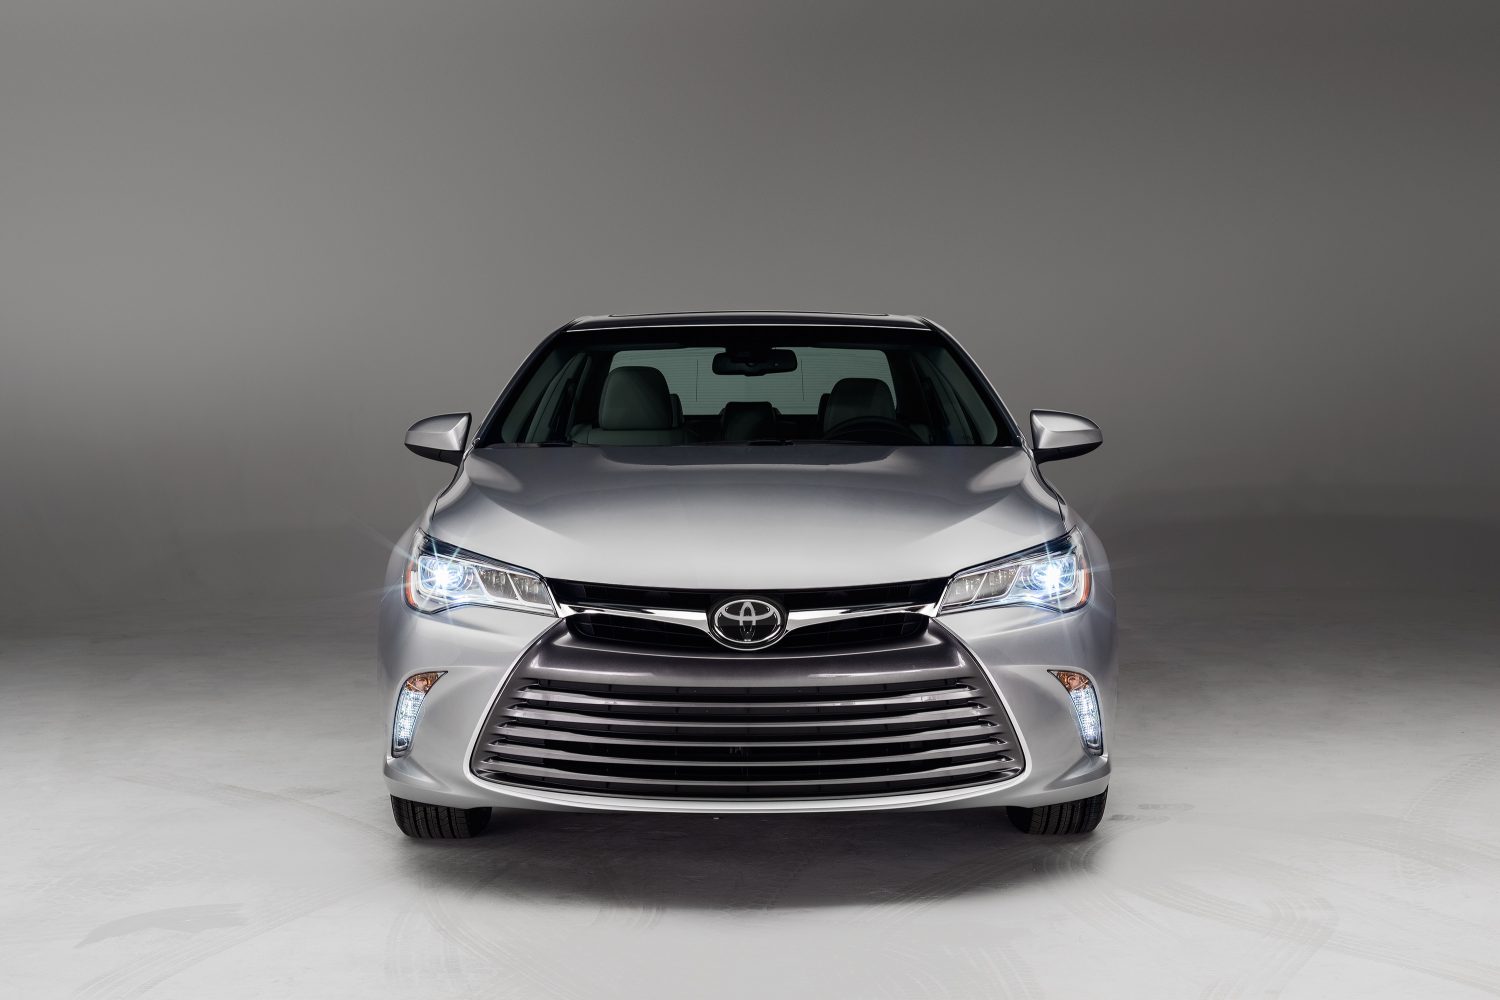 New 2015 Toyota Camry – The Best Just Got Better - Toyota USA Newsroom